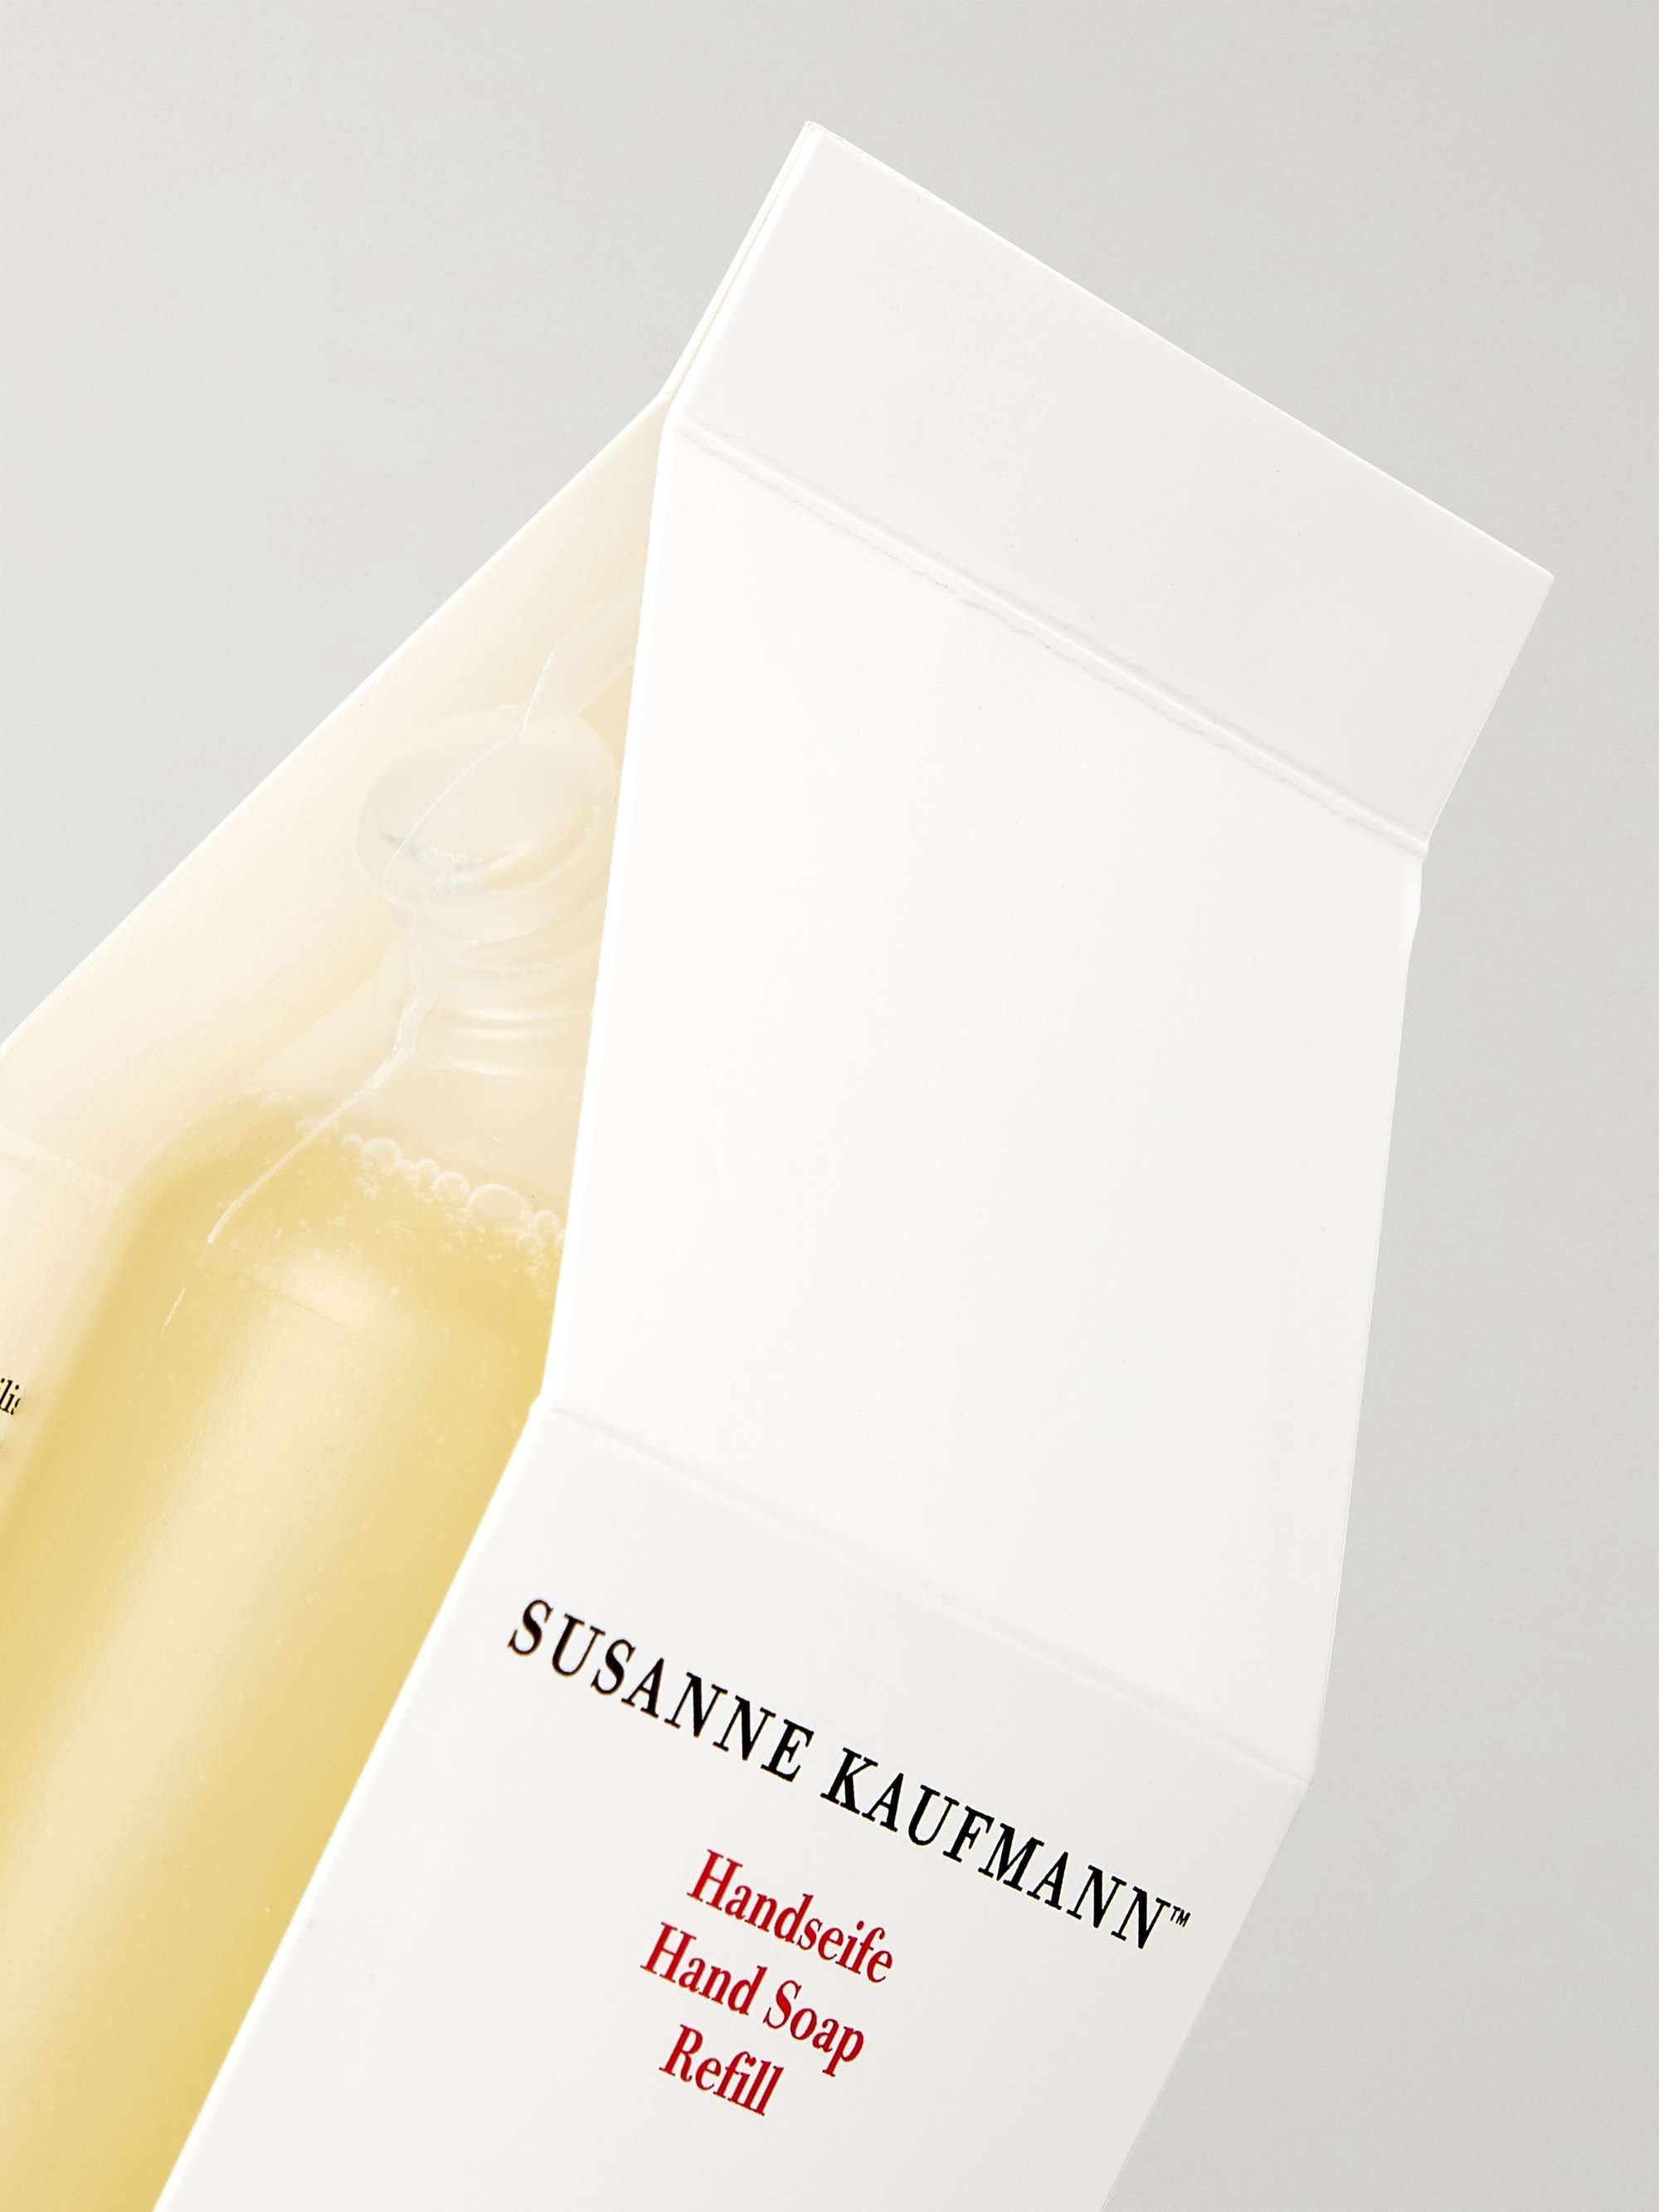 SUSANNE KAUFMANN Hand Soap Refill, 250ml